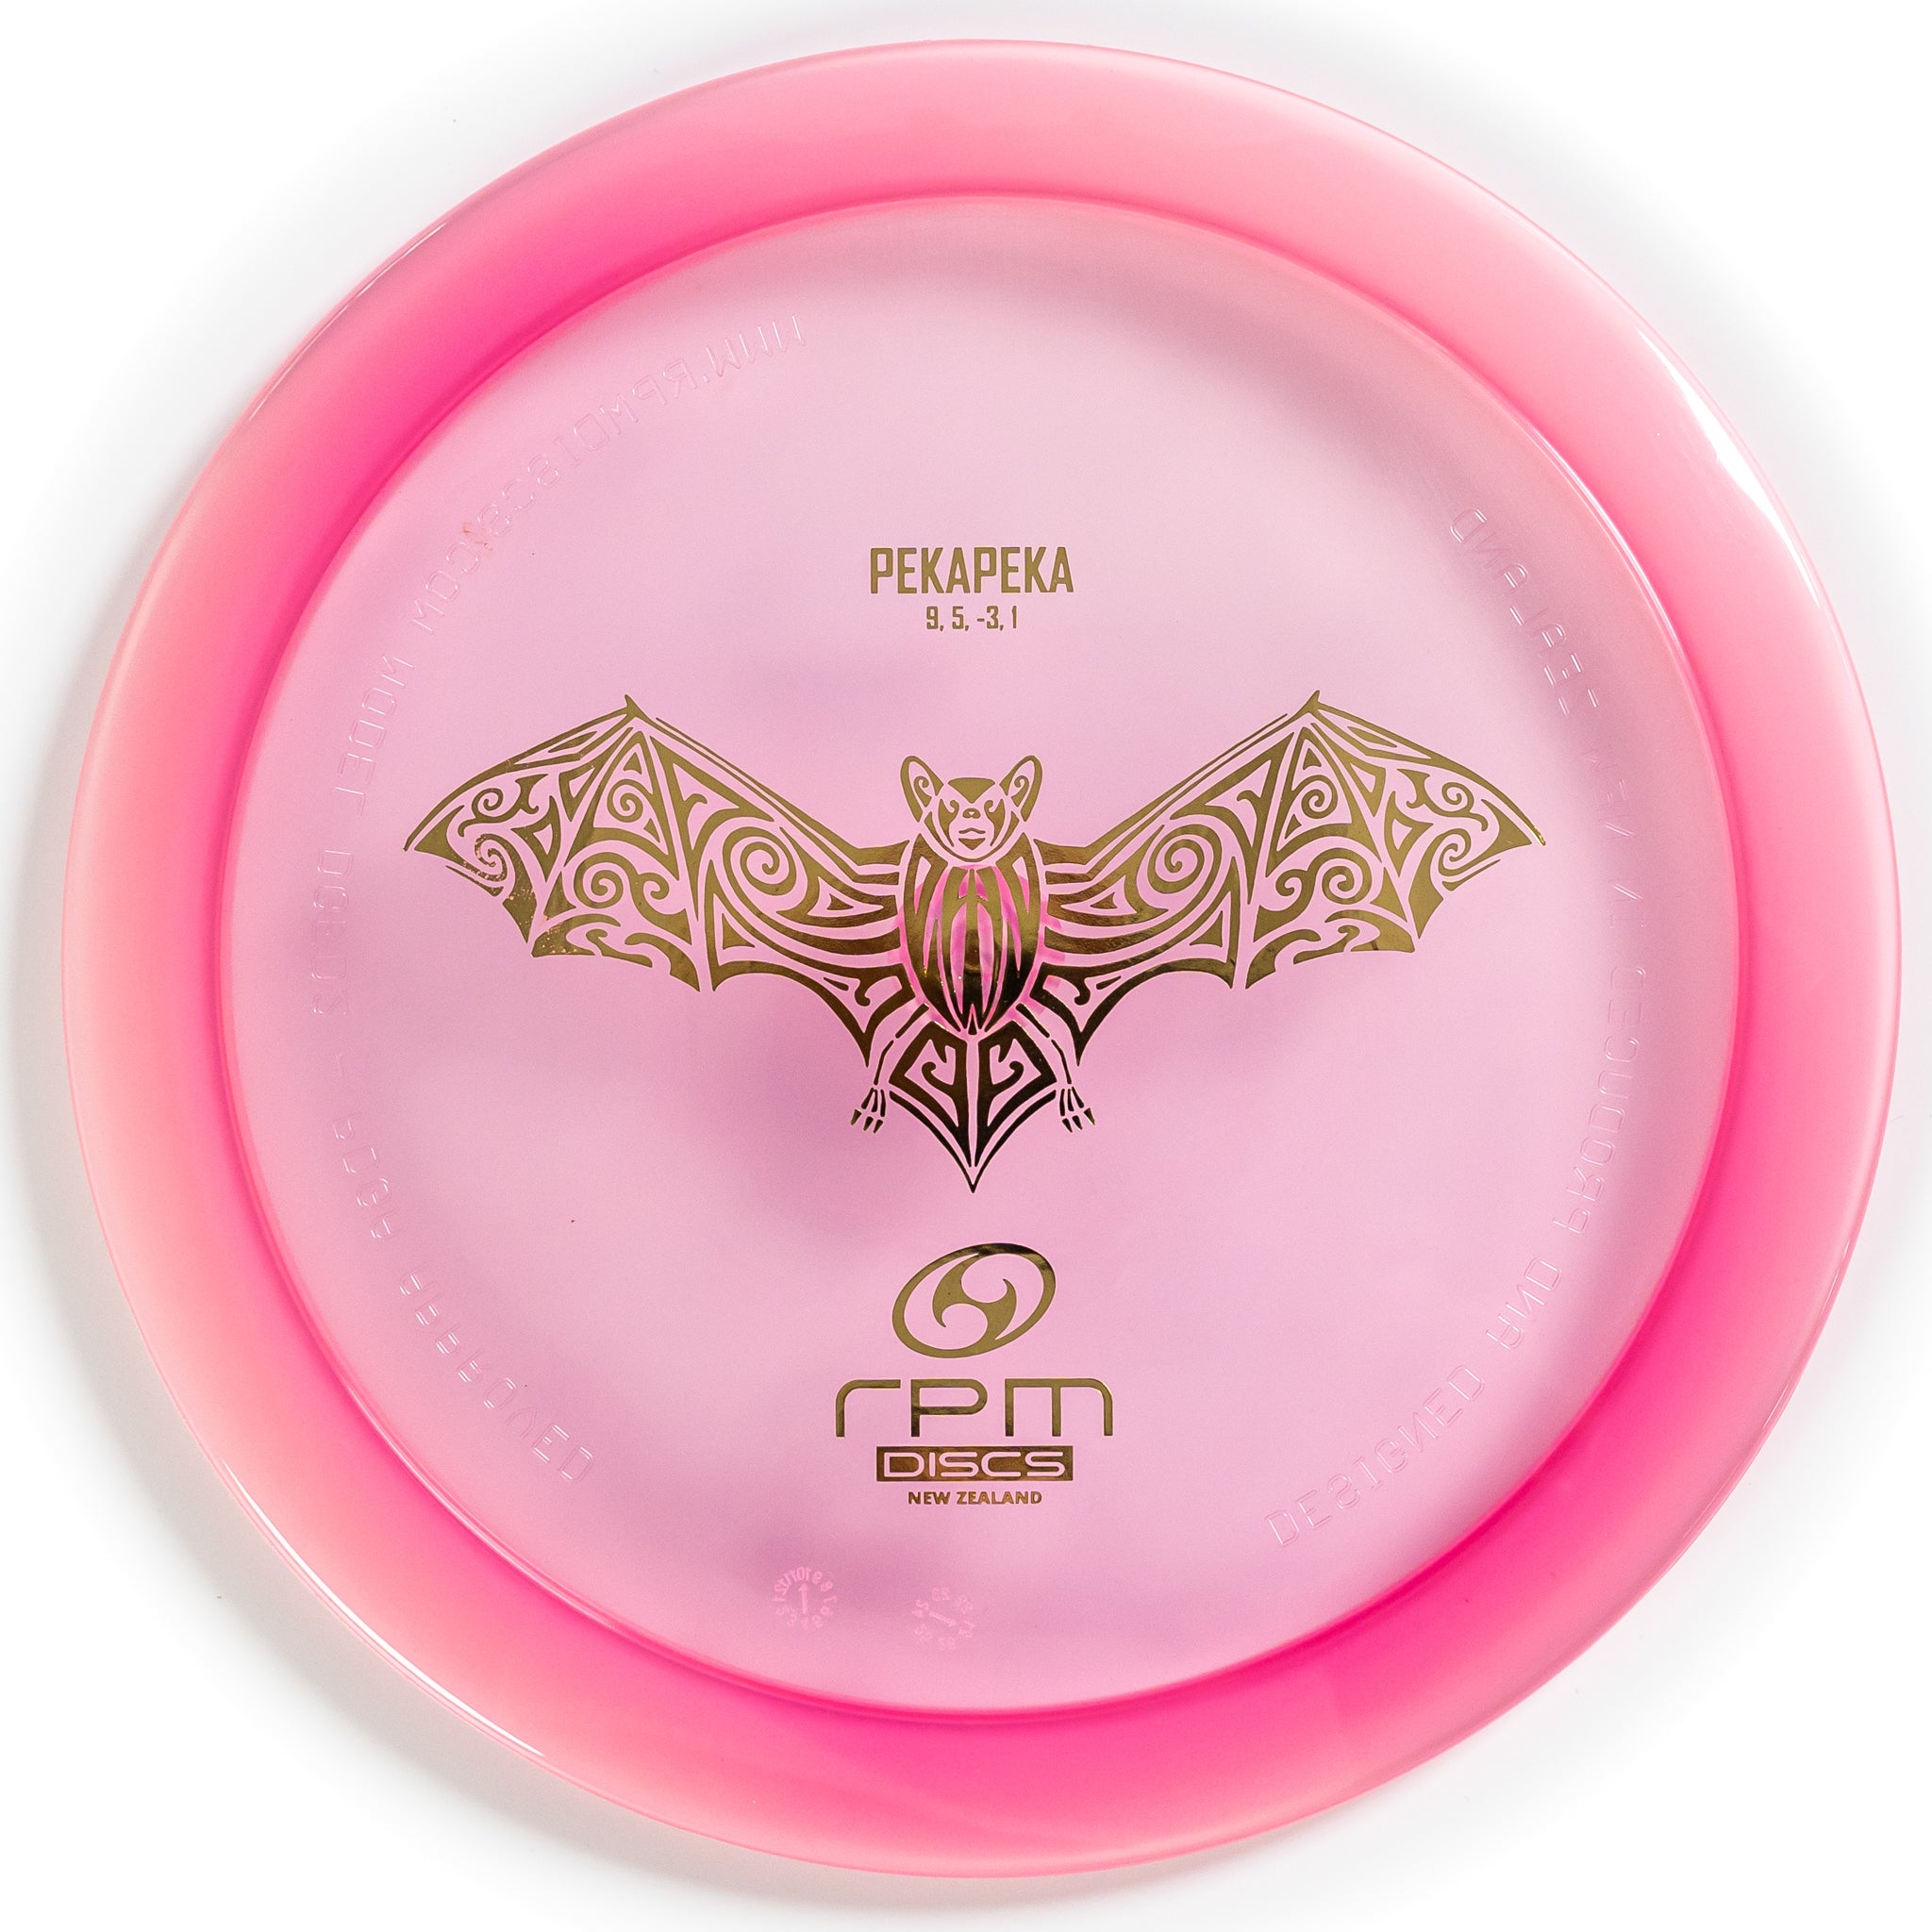 RPM Discs Pekapeka driver in pink